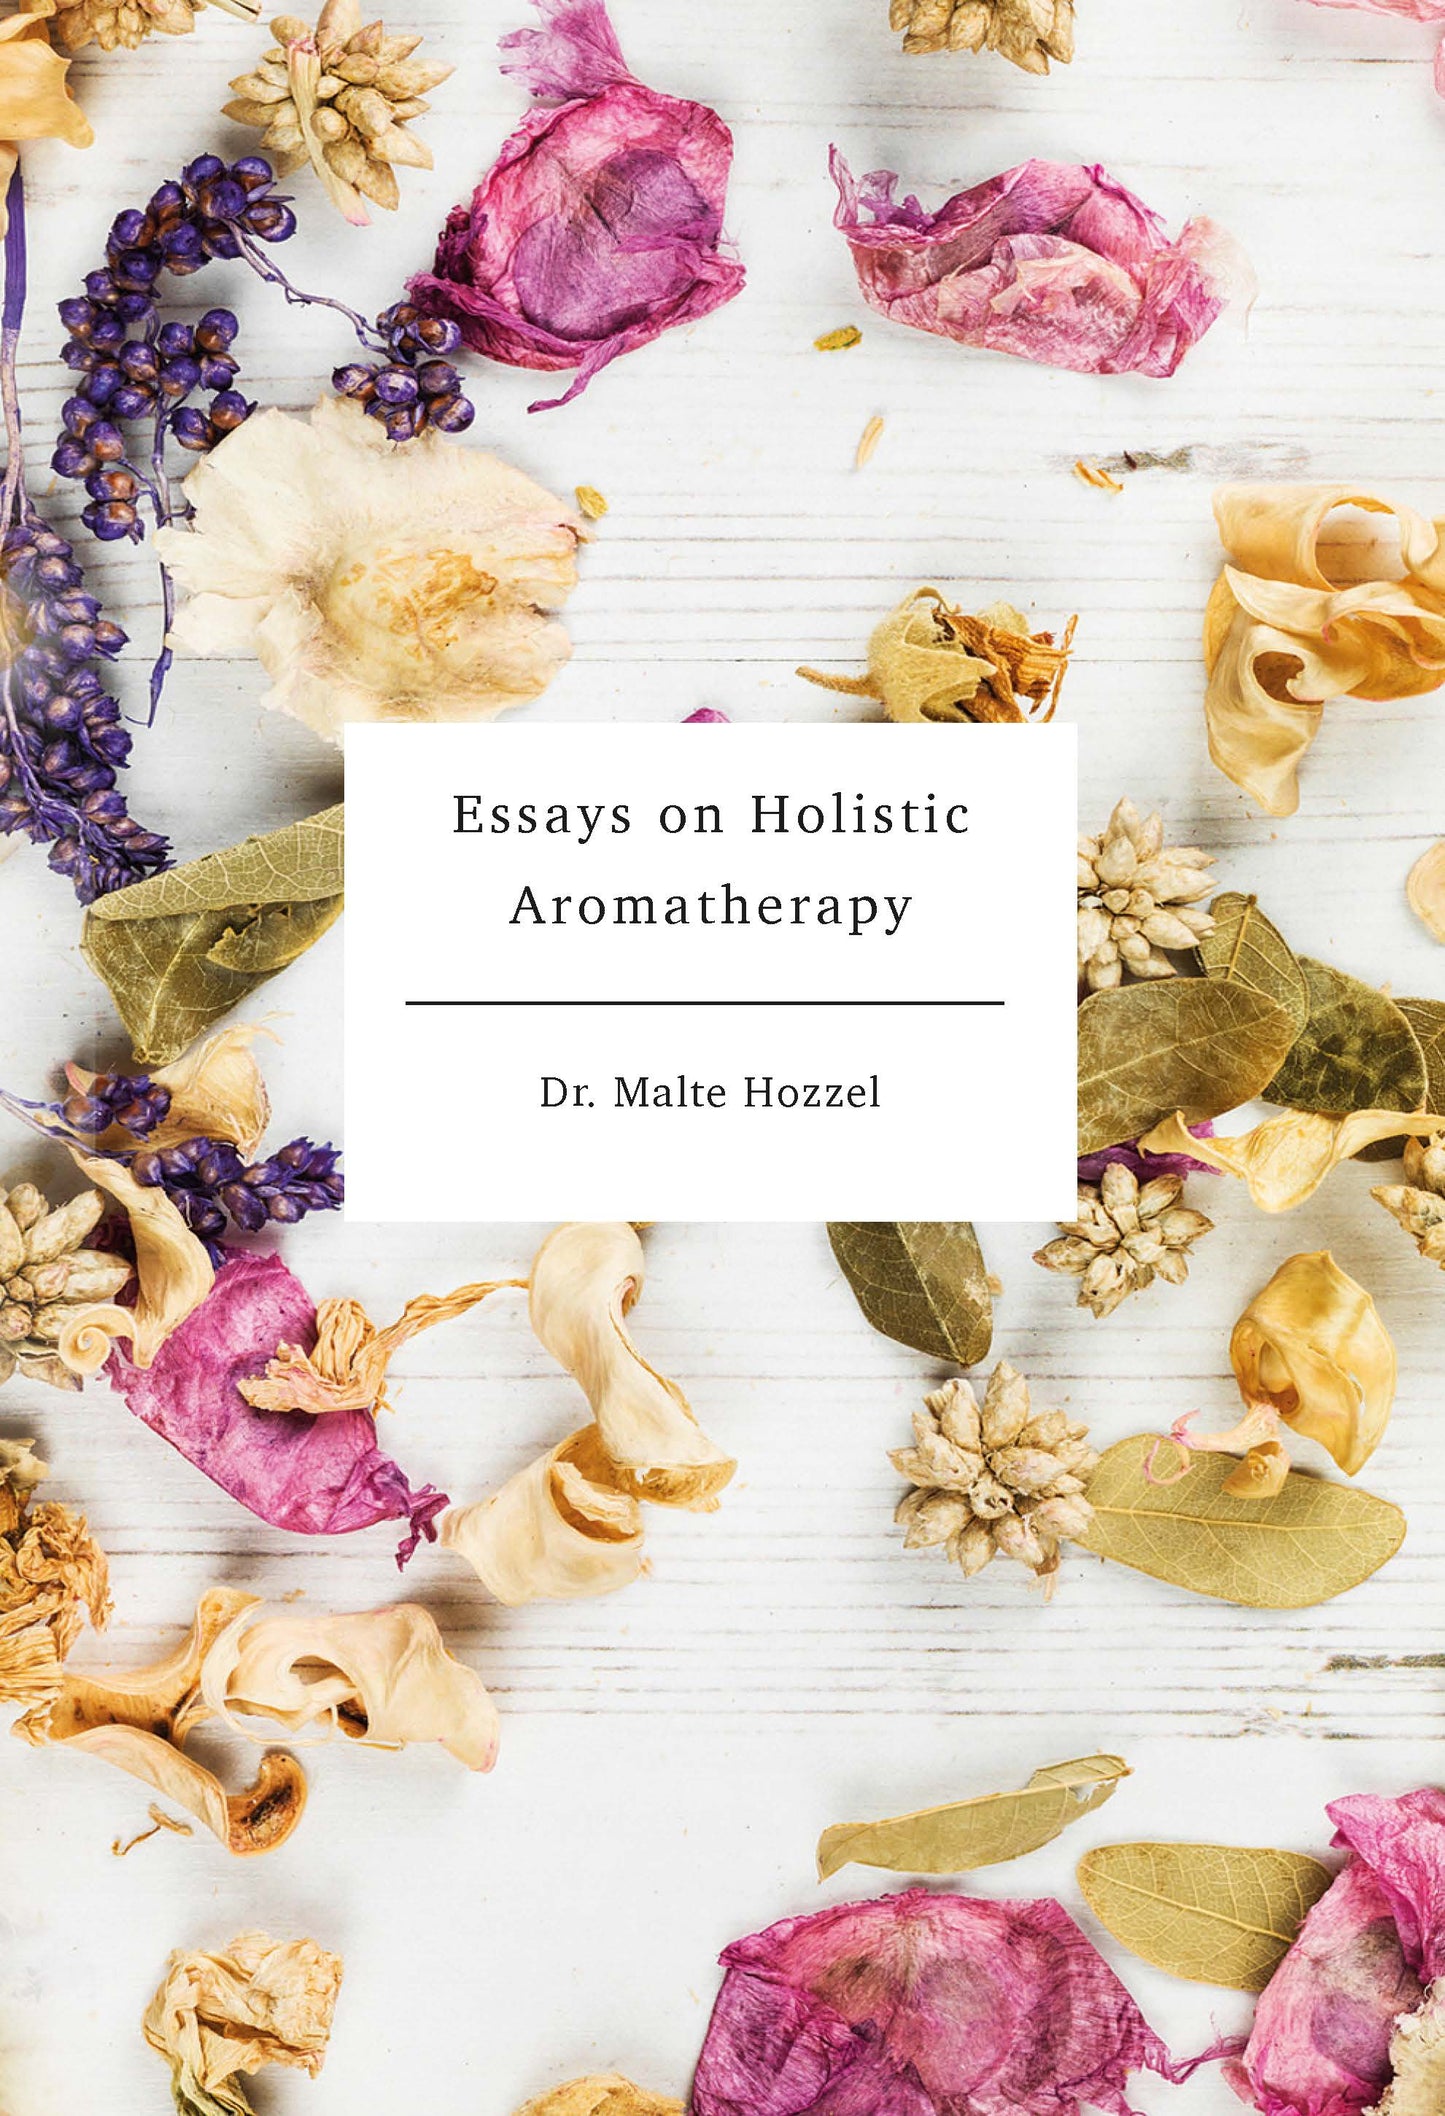 Essays on Holistic Aromatherapy by Dr. Malte Hozzel